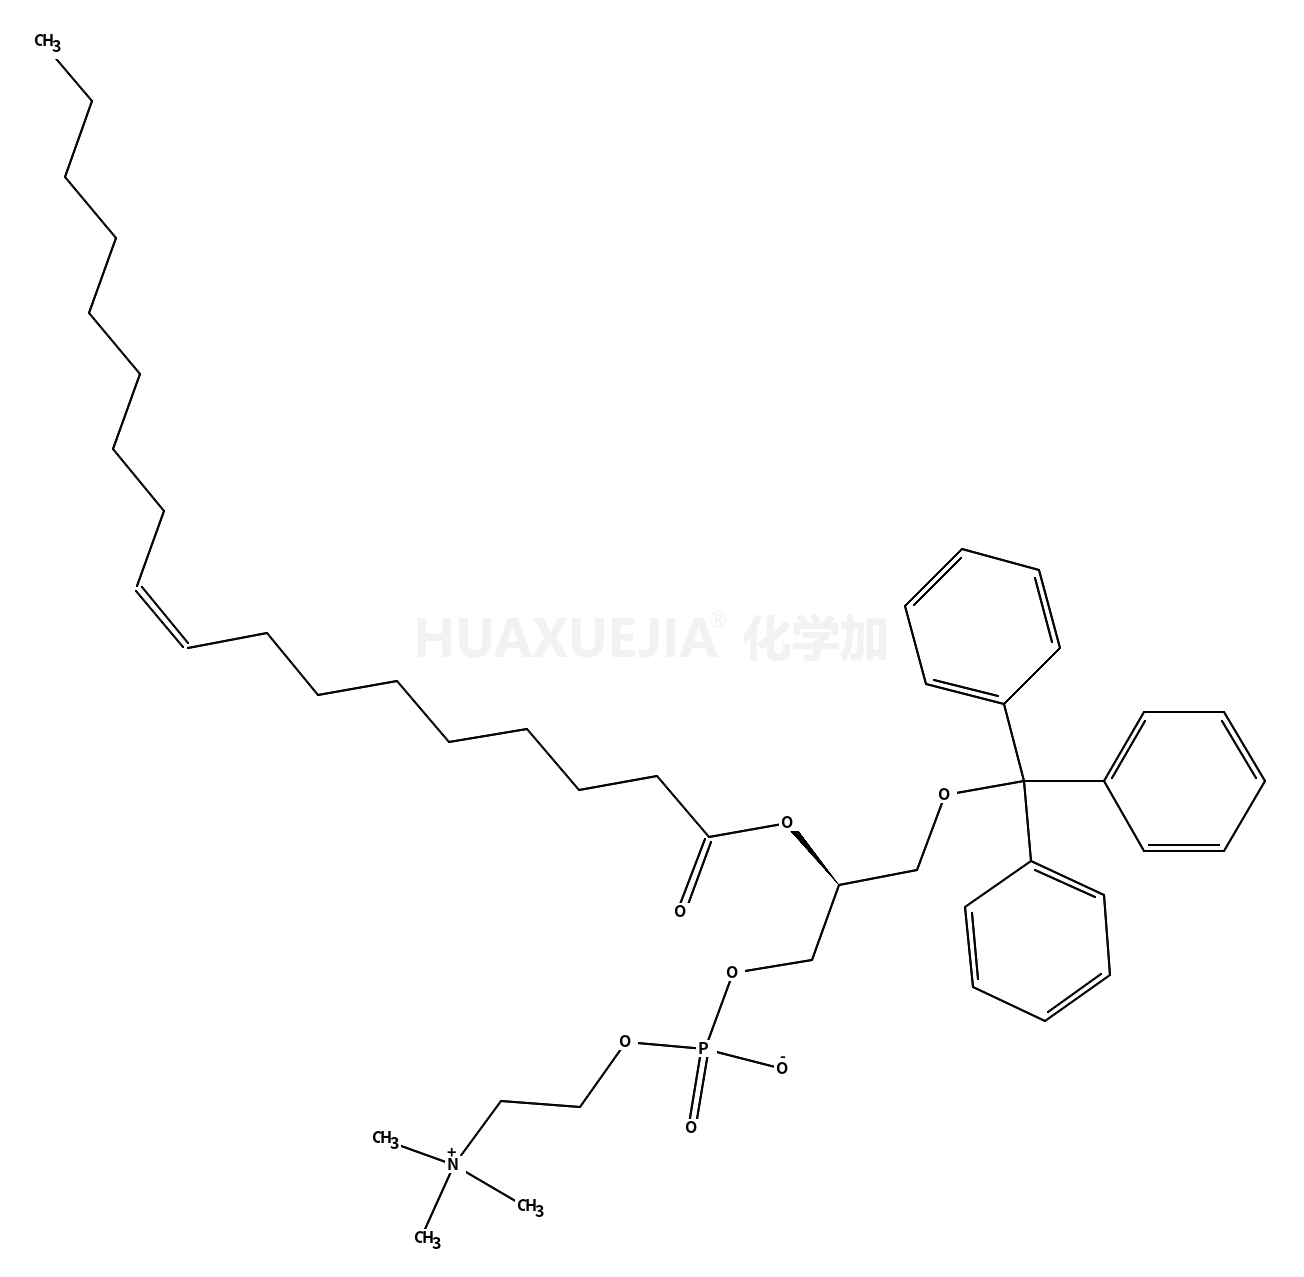 [(2R)-2-[(Z)-octadec-9-enoyl]oxy-3-trityloxypropyl] 2-(trimethylazaniumyl)ethyl phosphate